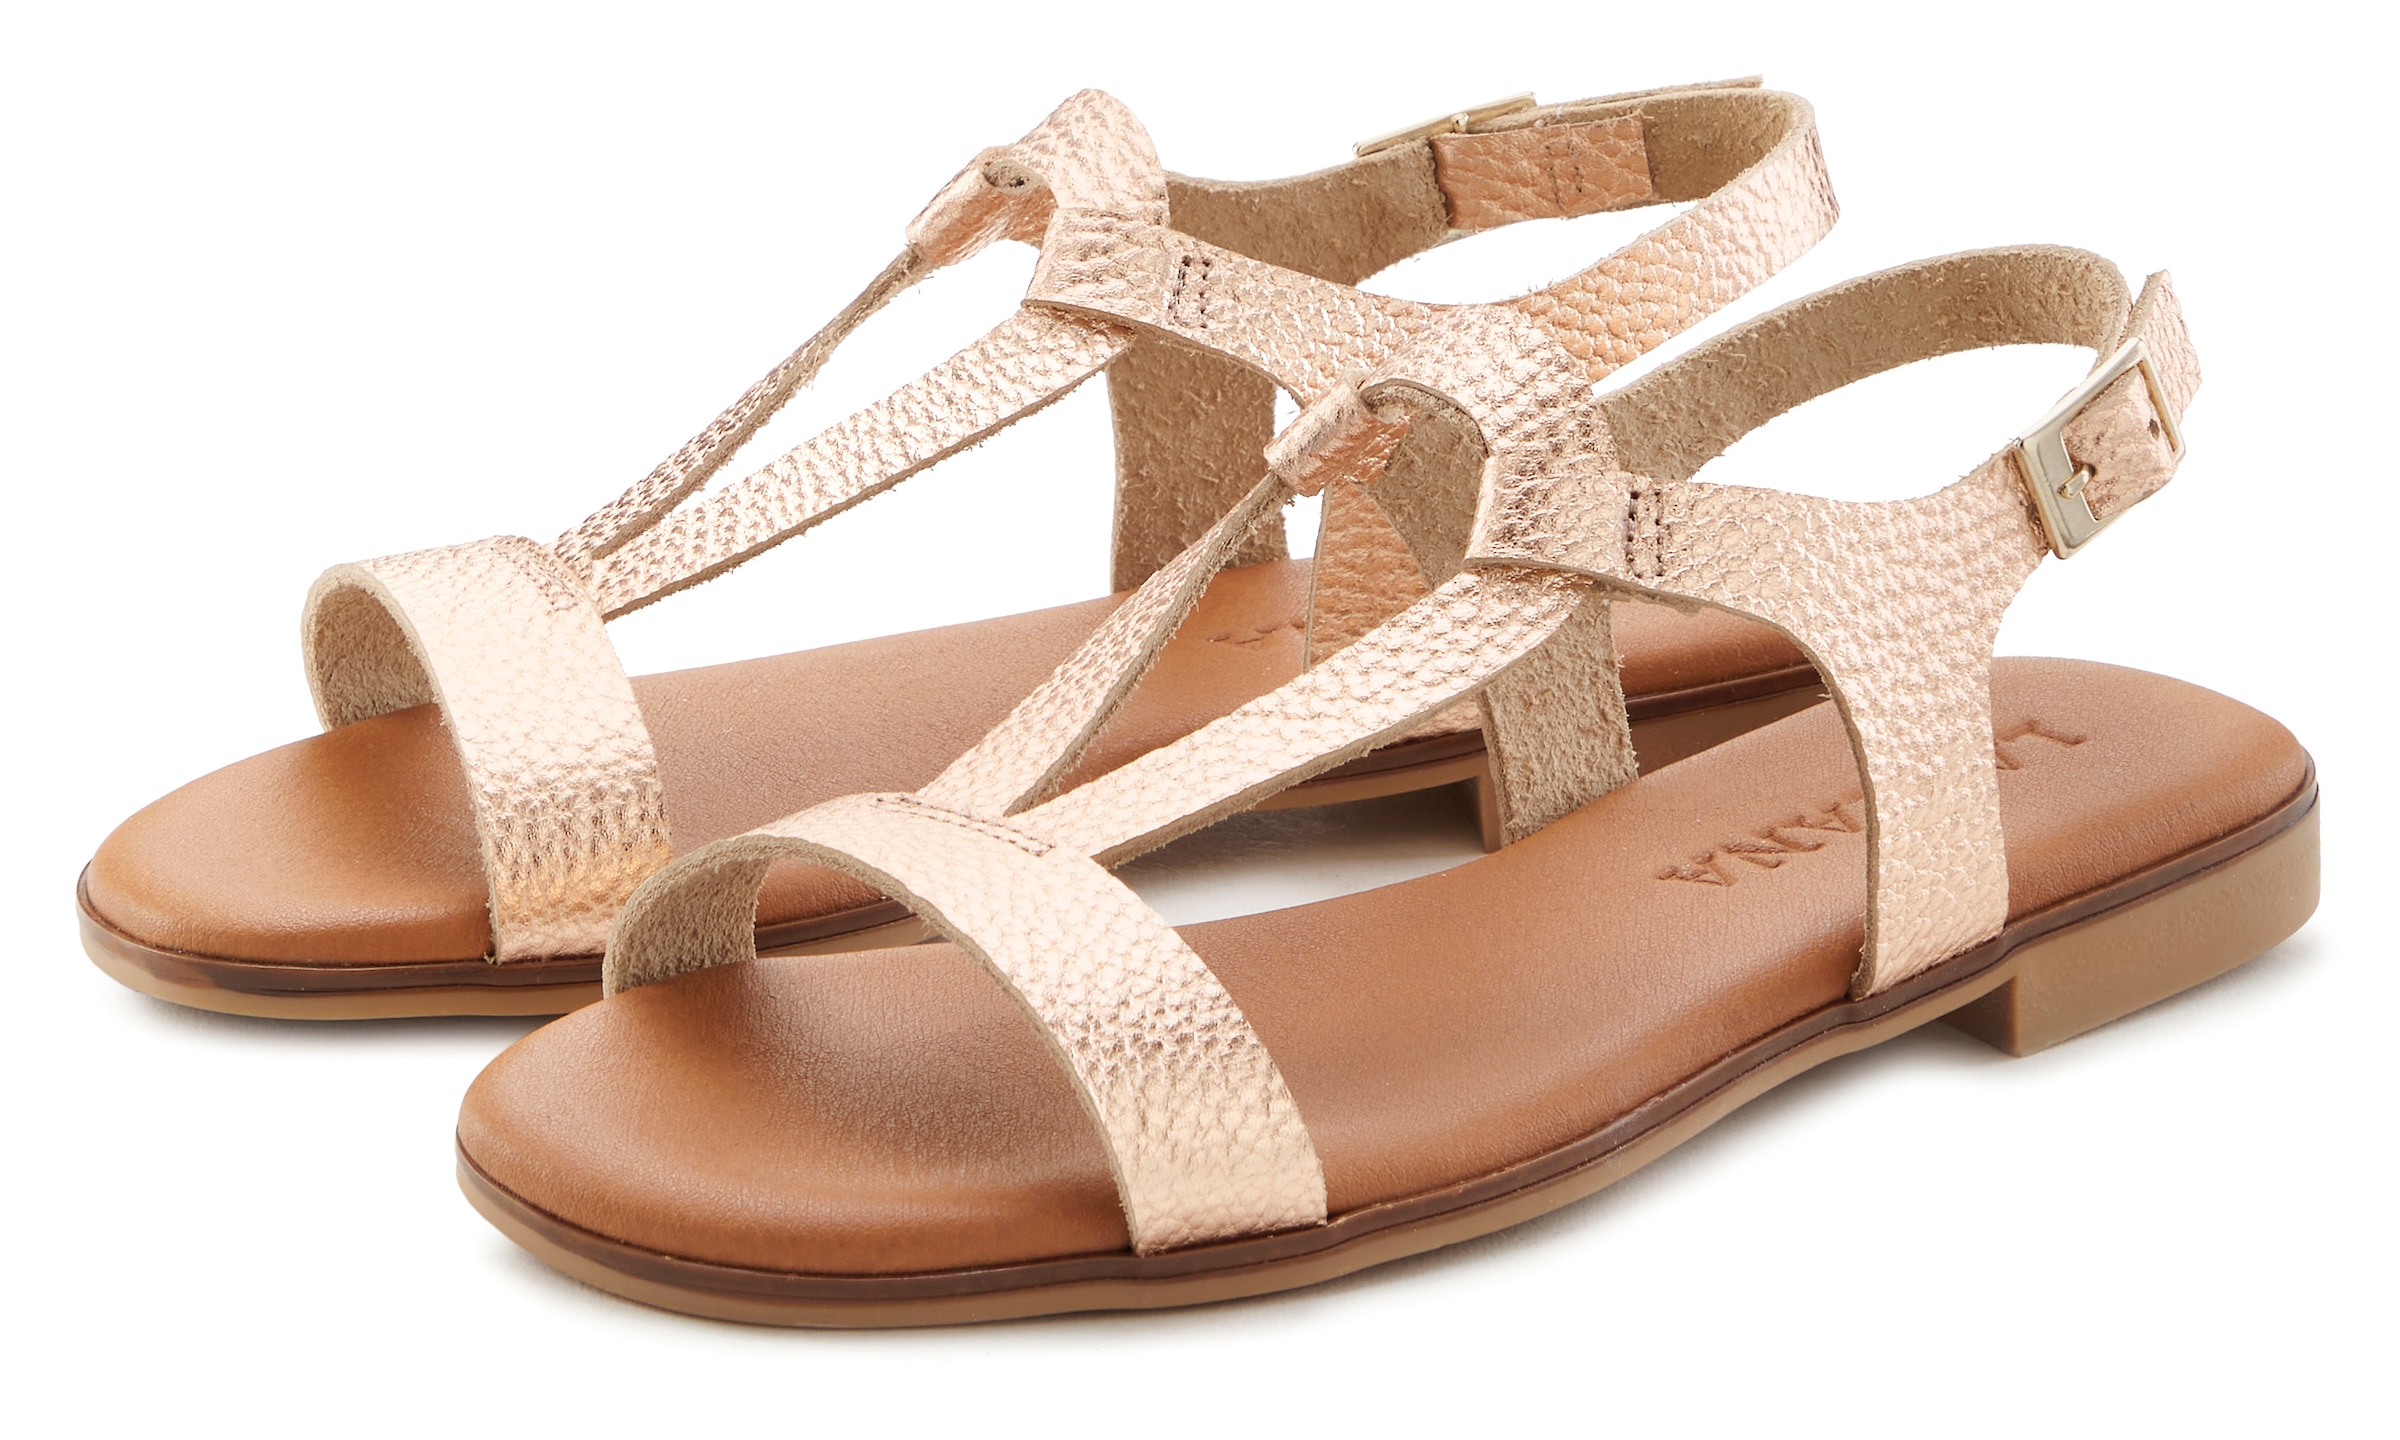 Sandale, Sandalette, Sommerschuh aus hochwertigem Leder im Metallic-Look